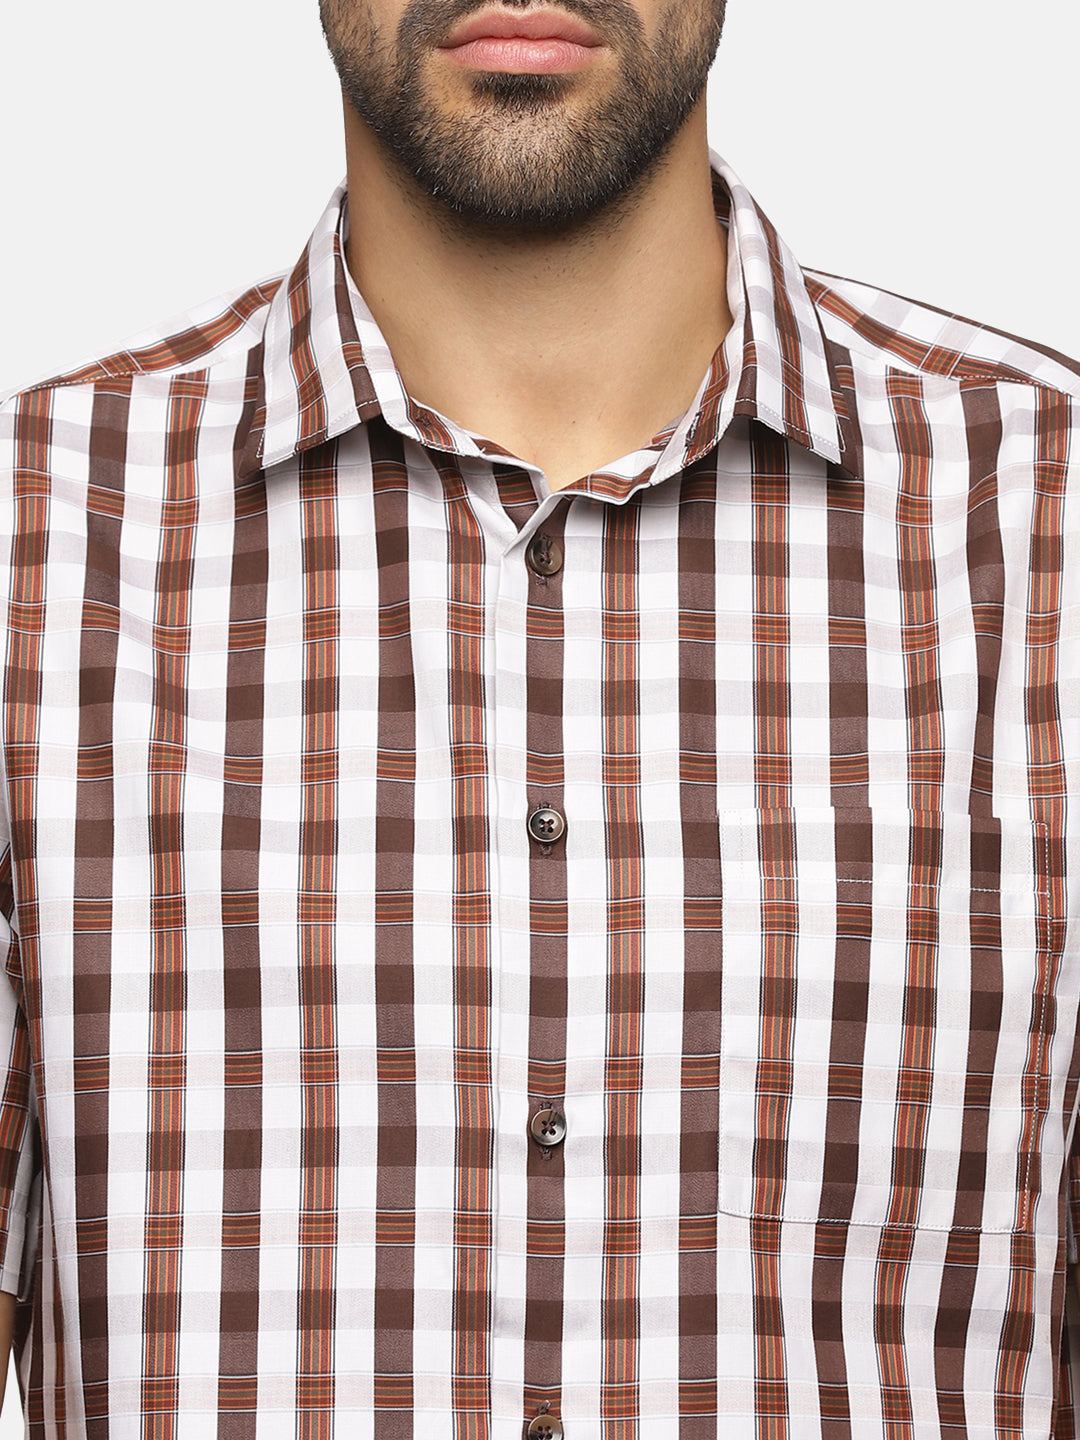 Men White & Brown Checkered Slim Fit Casual Shirt, Men's Half Sleeve Cotton Shirt